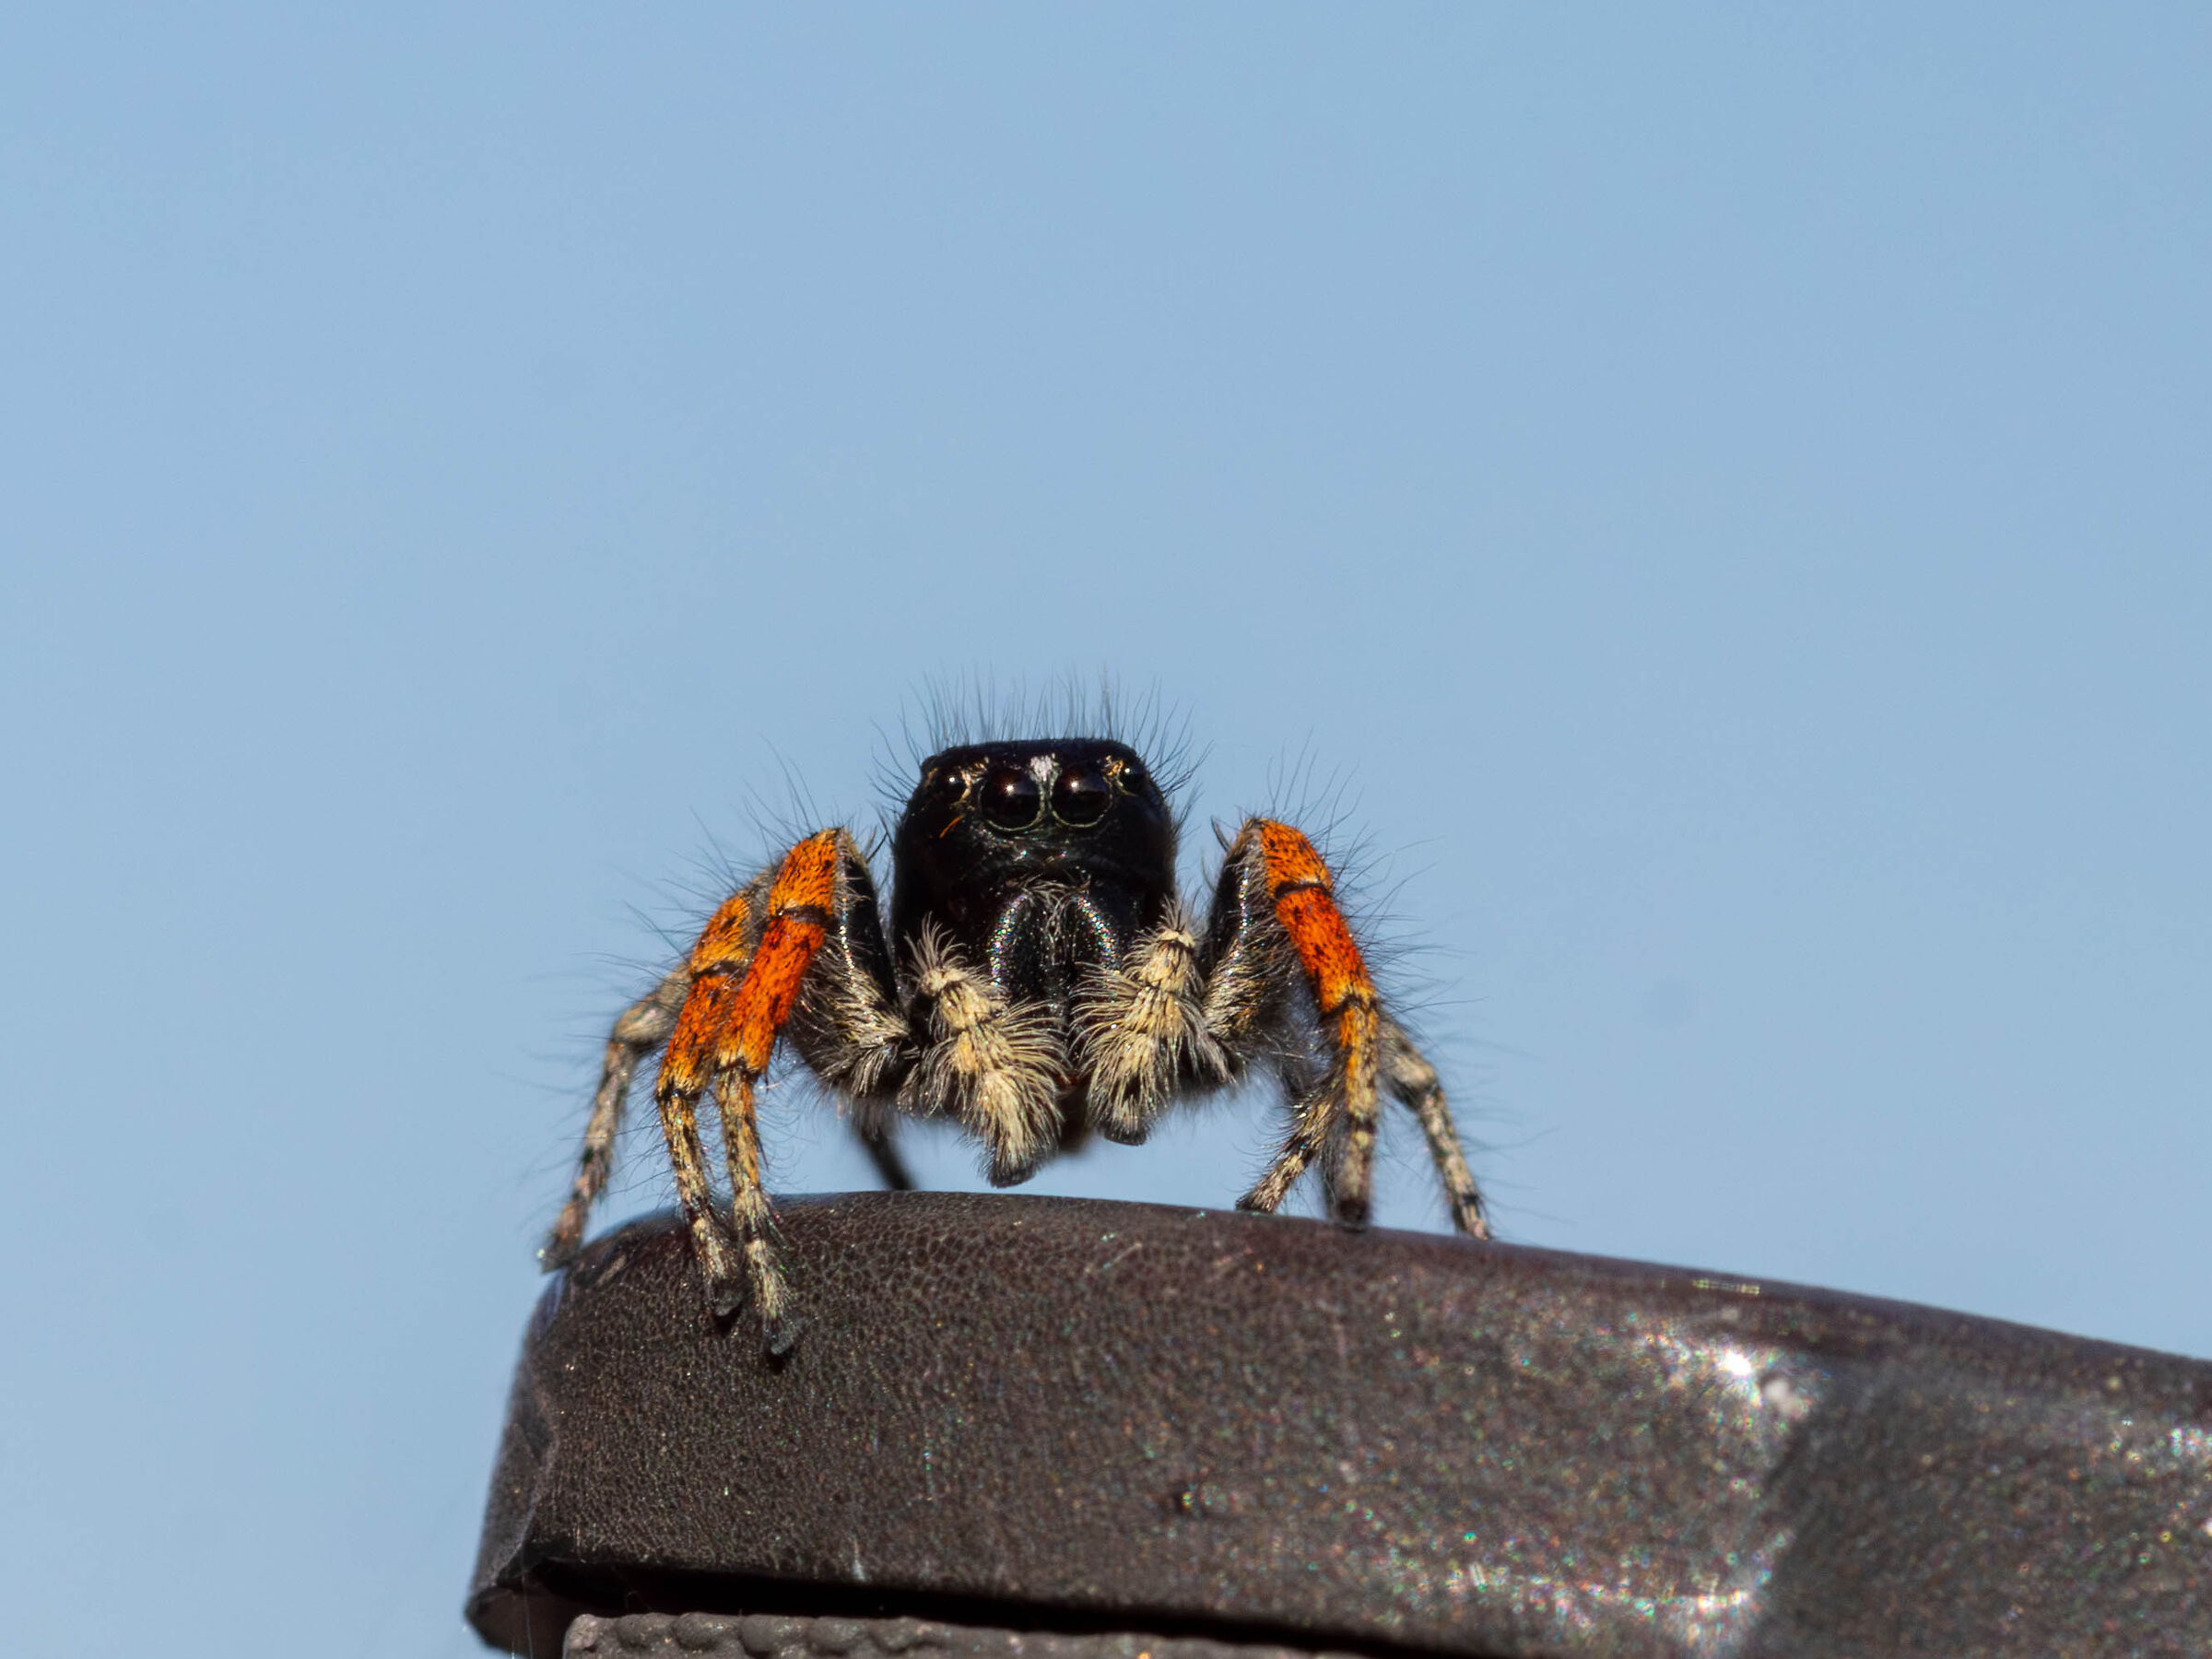 Philaeus chrysops (Blood jumping spider)...